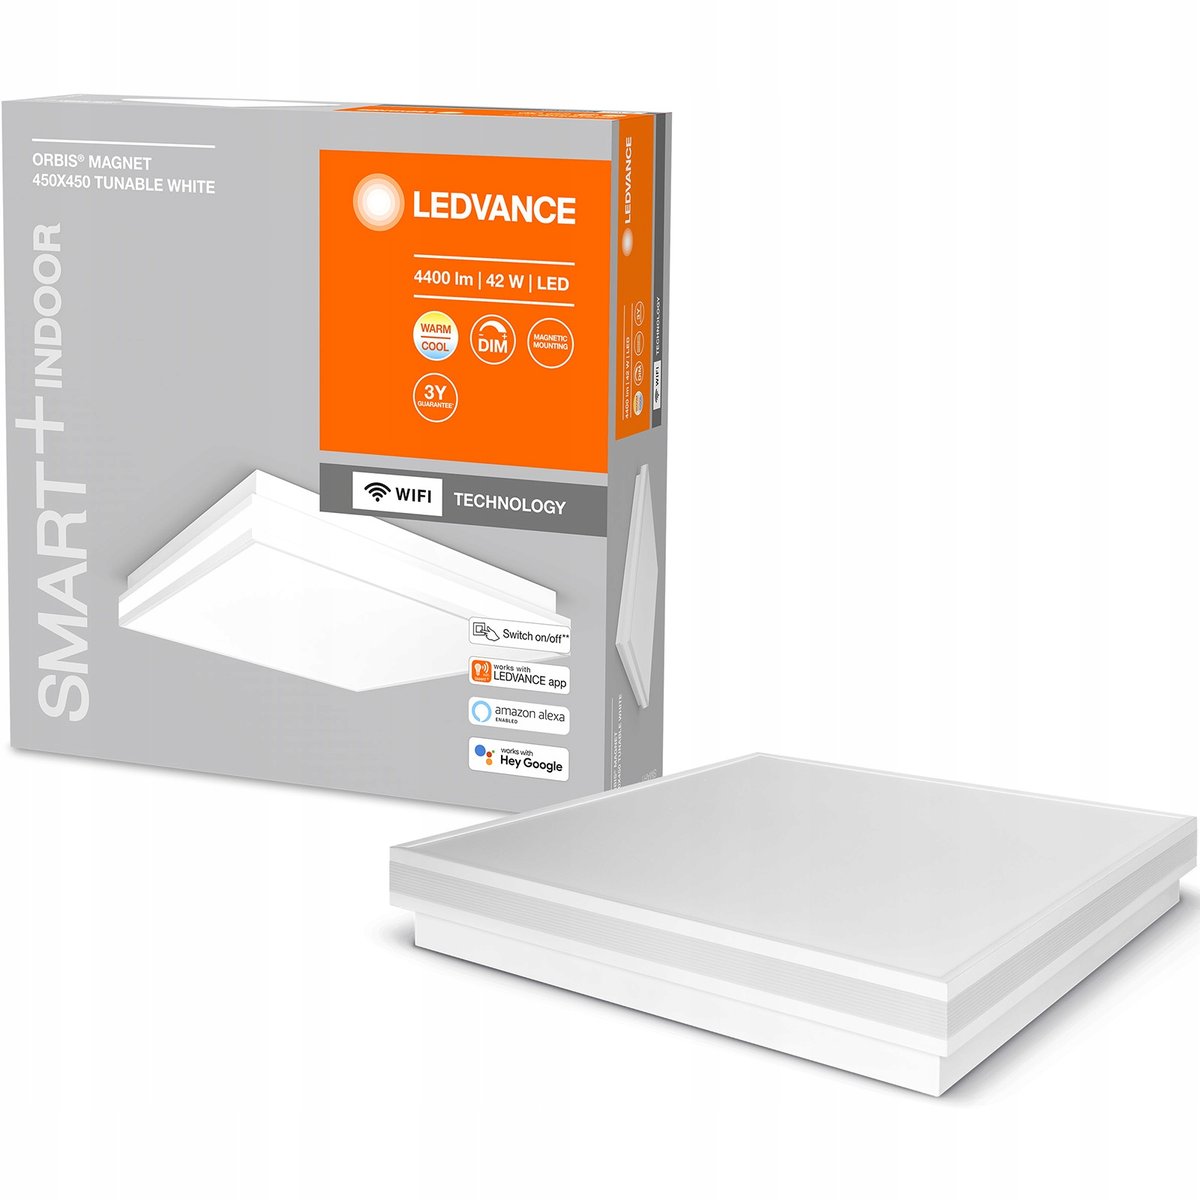 LEDVANCE SMART+ SMART+ WiFi Orbis Magnet biała, 45x45cm